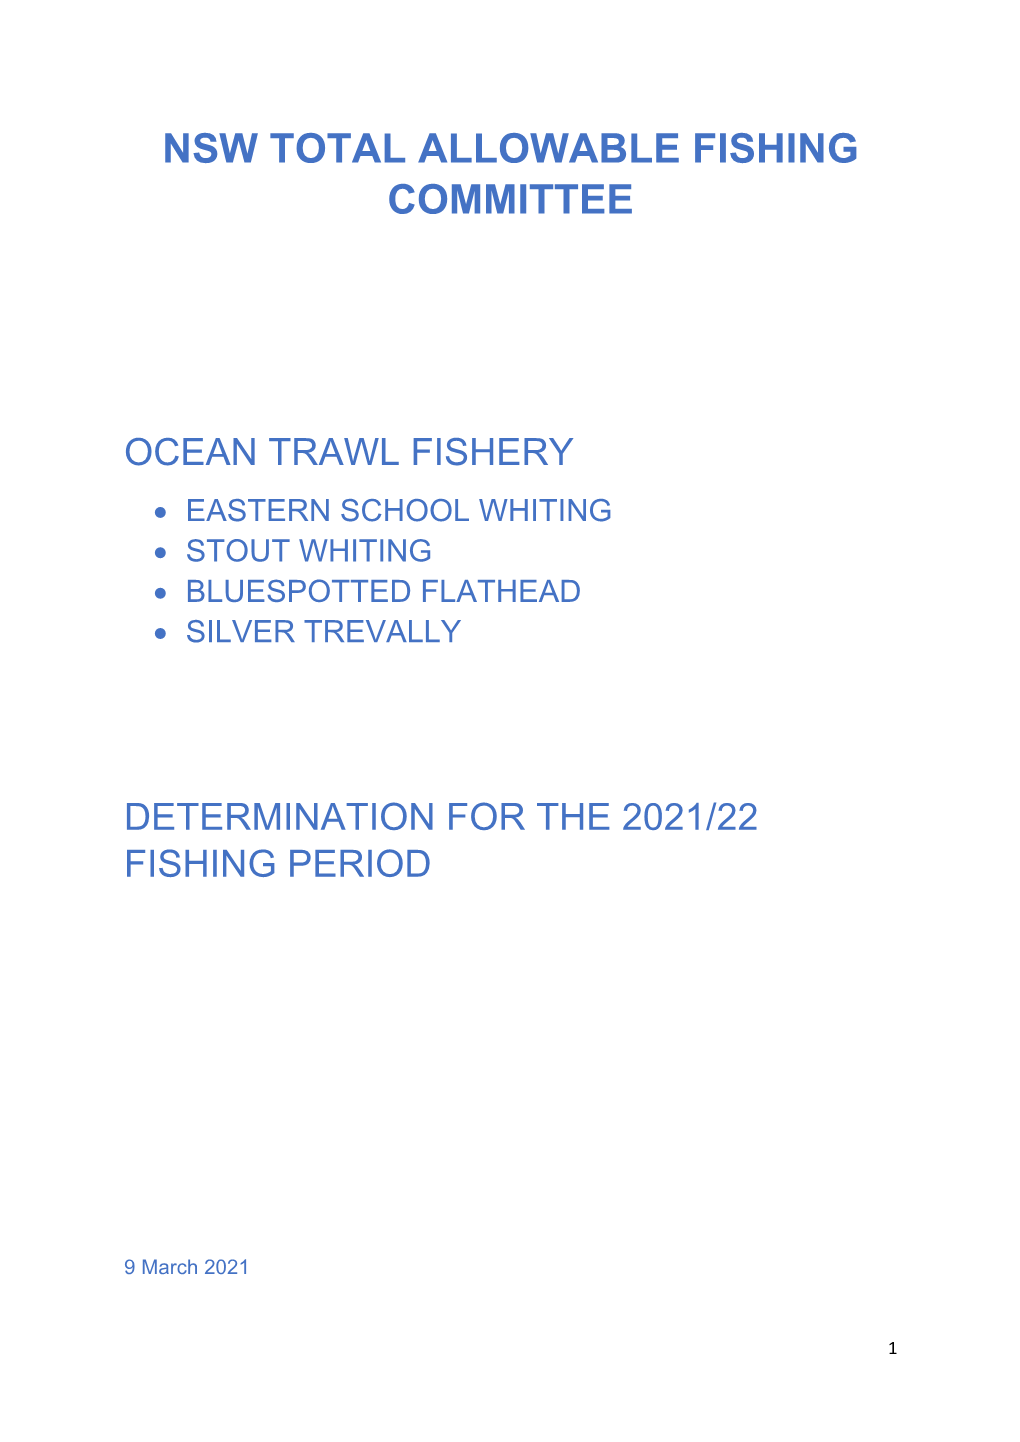 Ocean Trawl Fishery Determination for 2021/22 Fishing Period